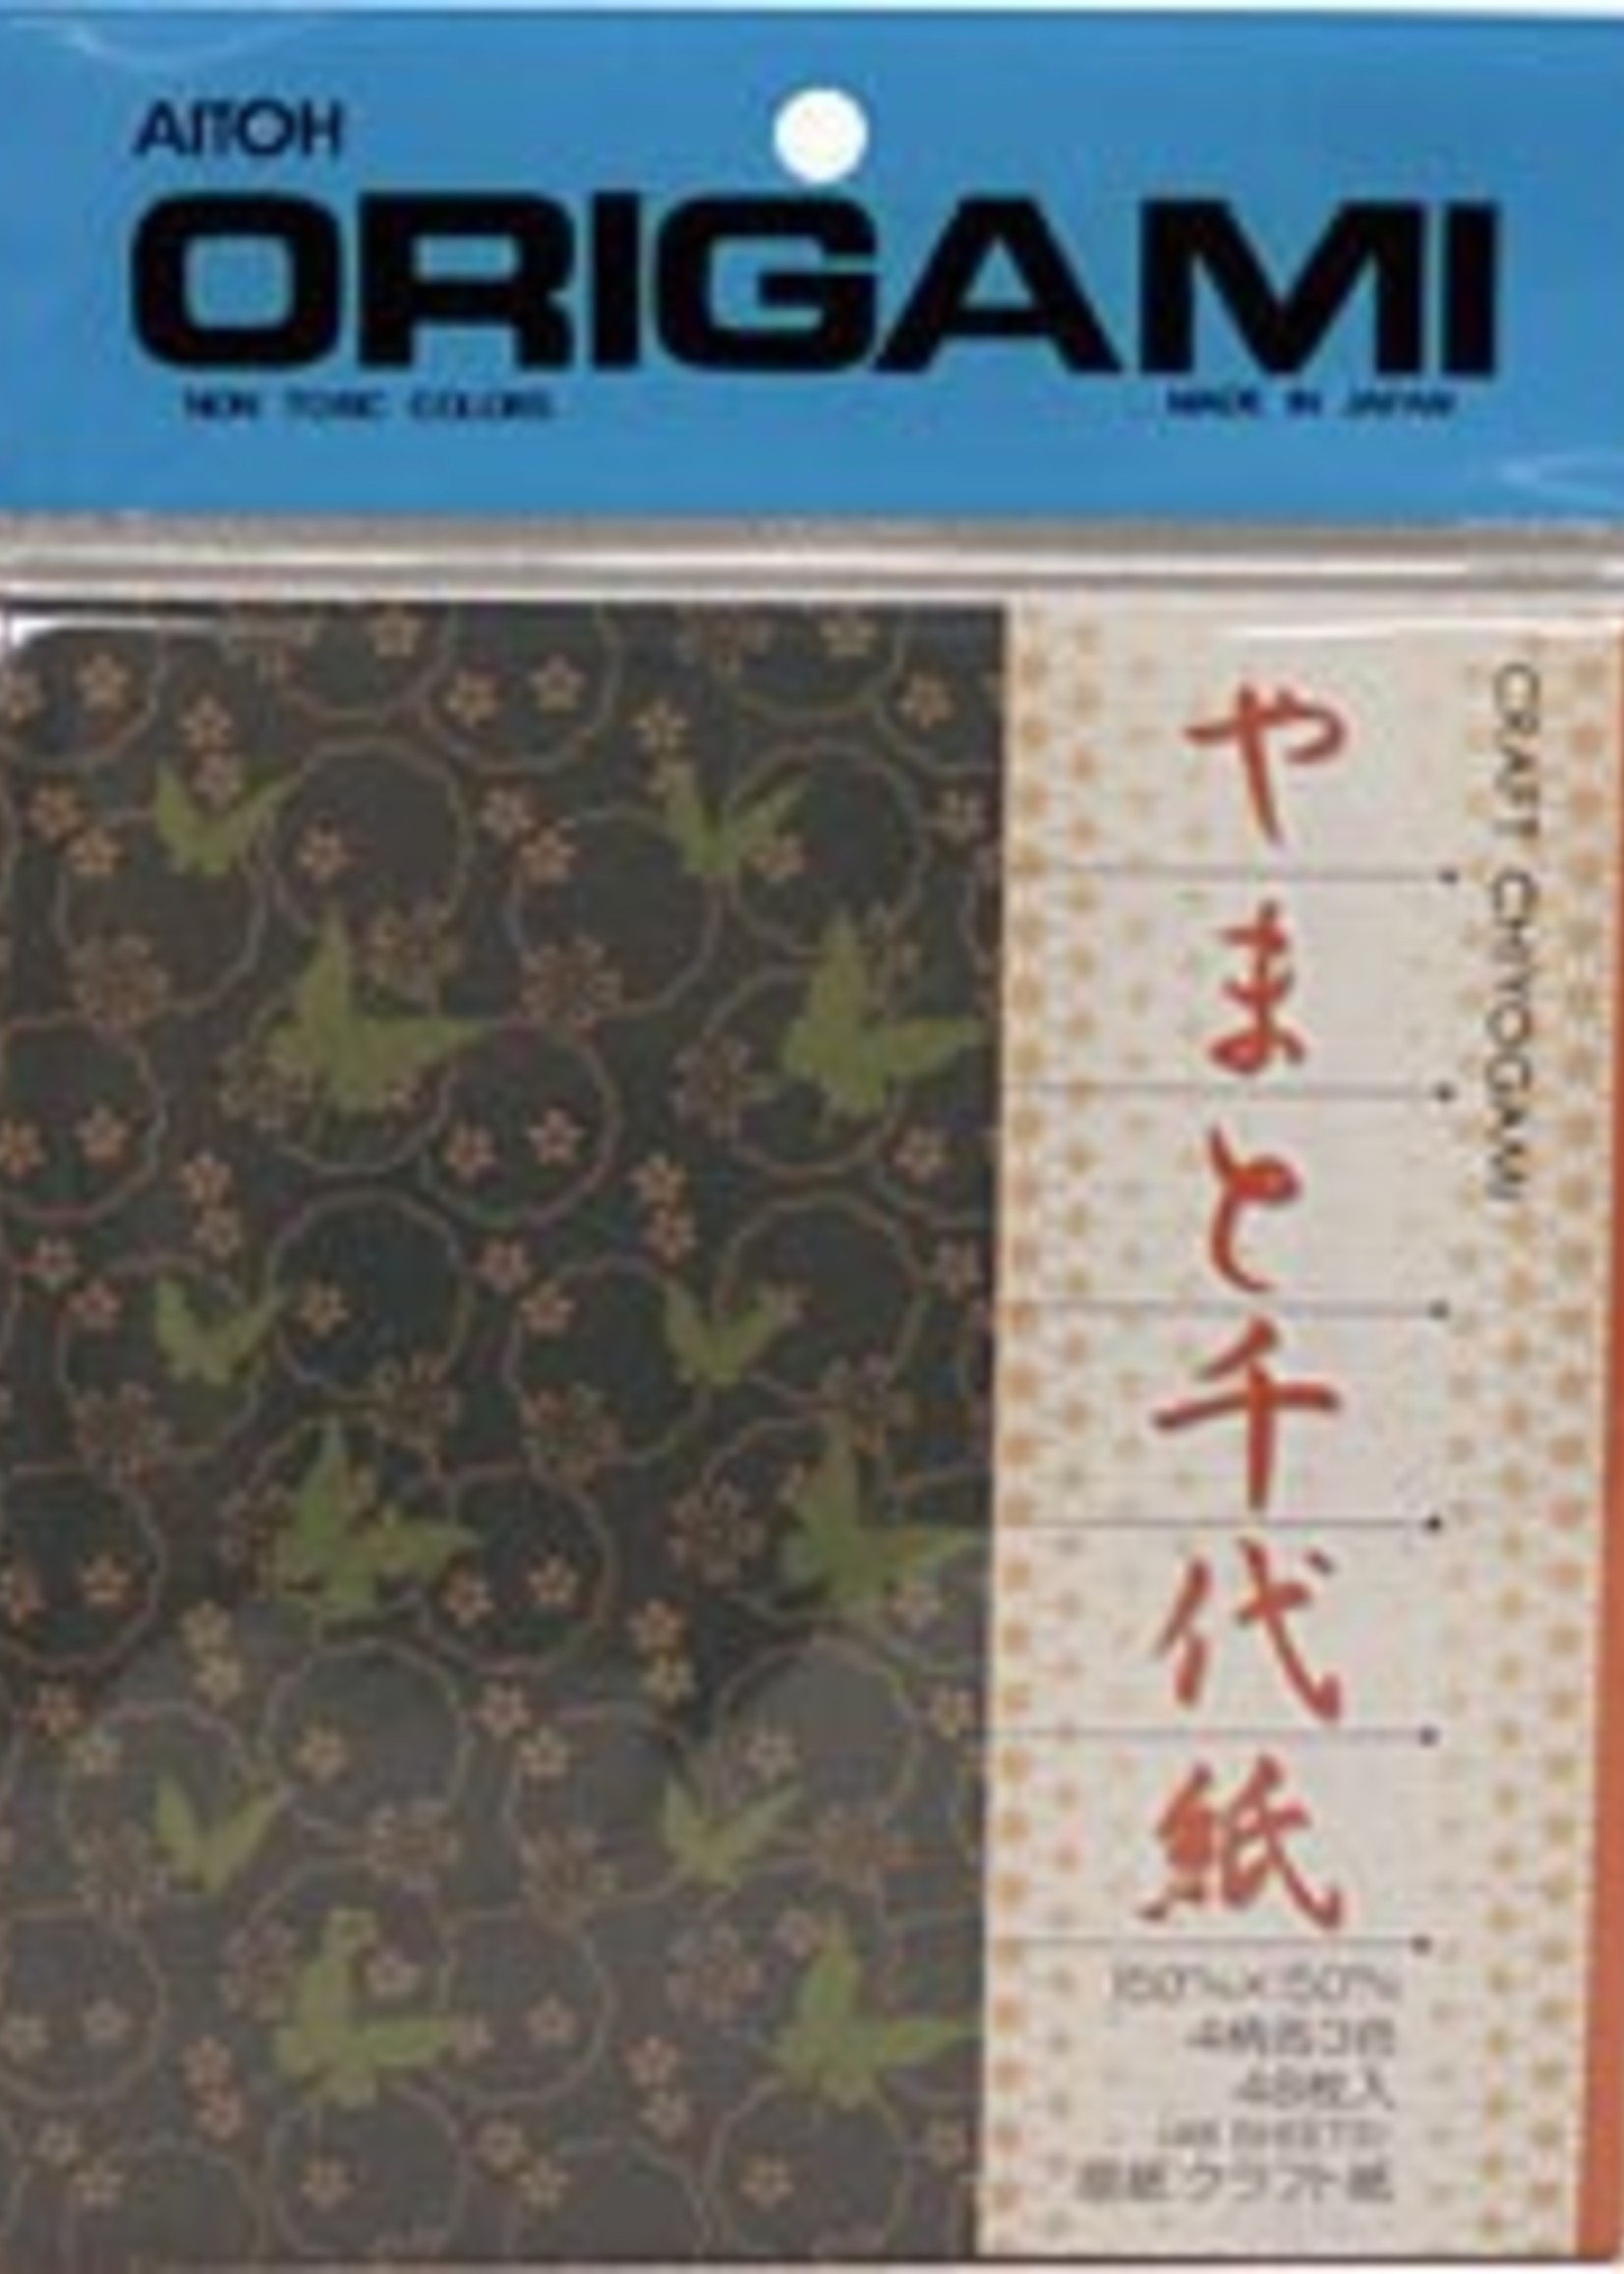 AITOH AITOH ORIGAMI PAPER CRAFT PRINT CHIYOGAMI 5 7/8" 48/PK